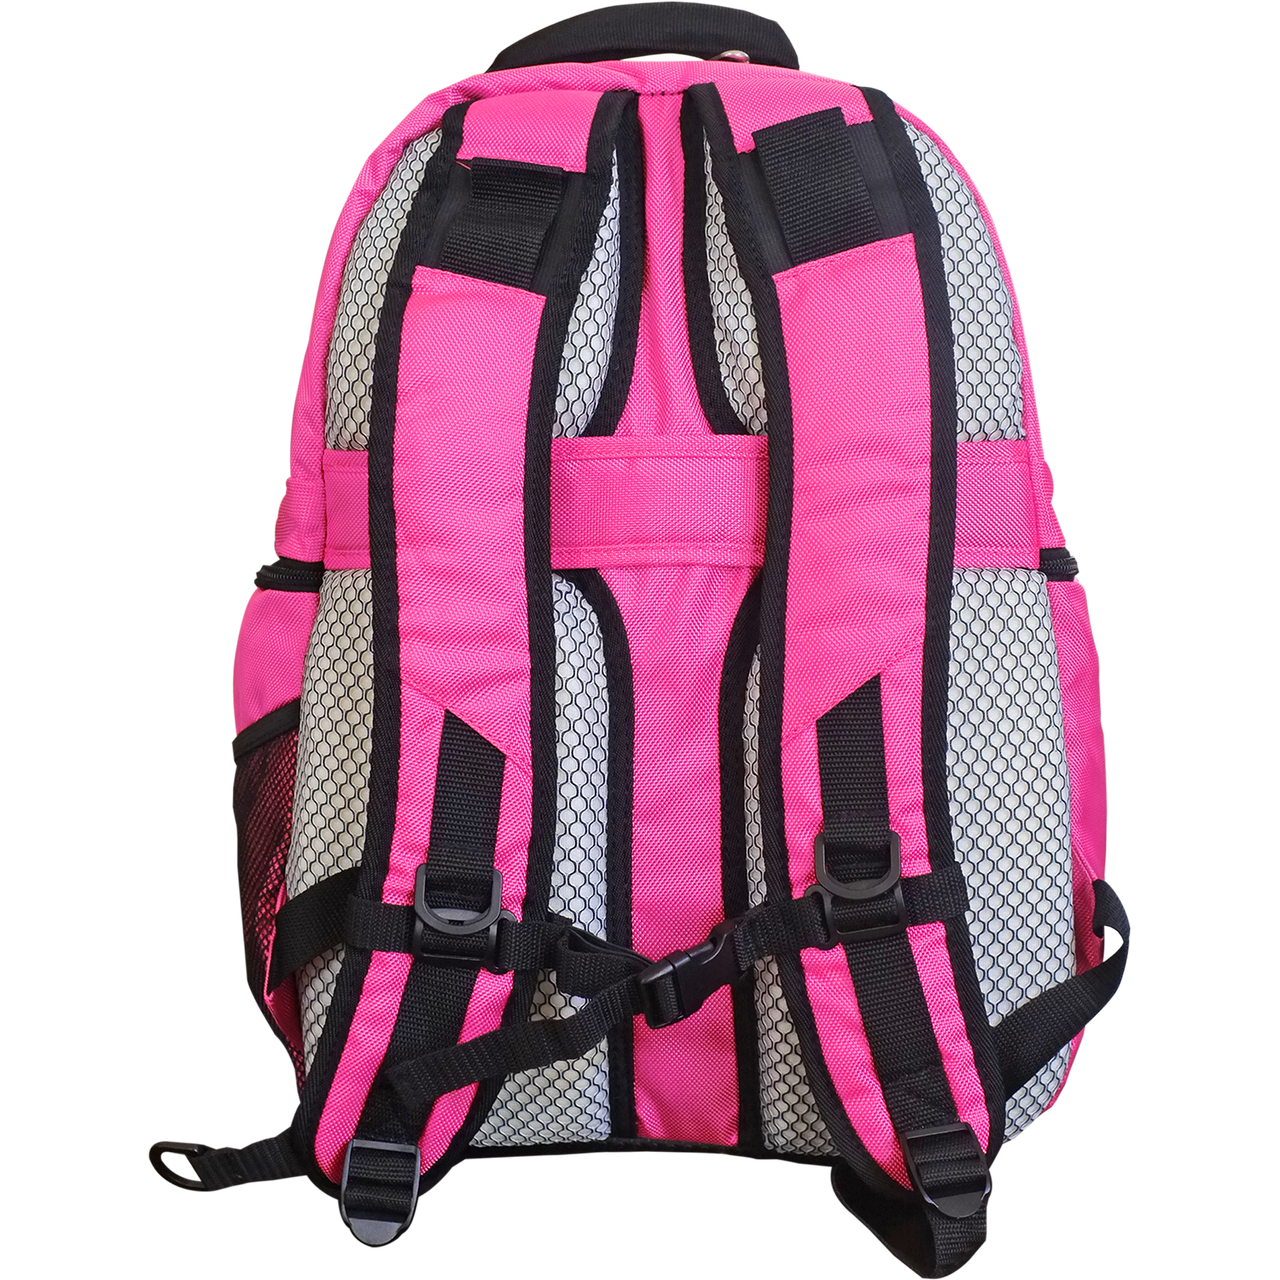 Los Angeles Dodgers Laptop Backpack Pink